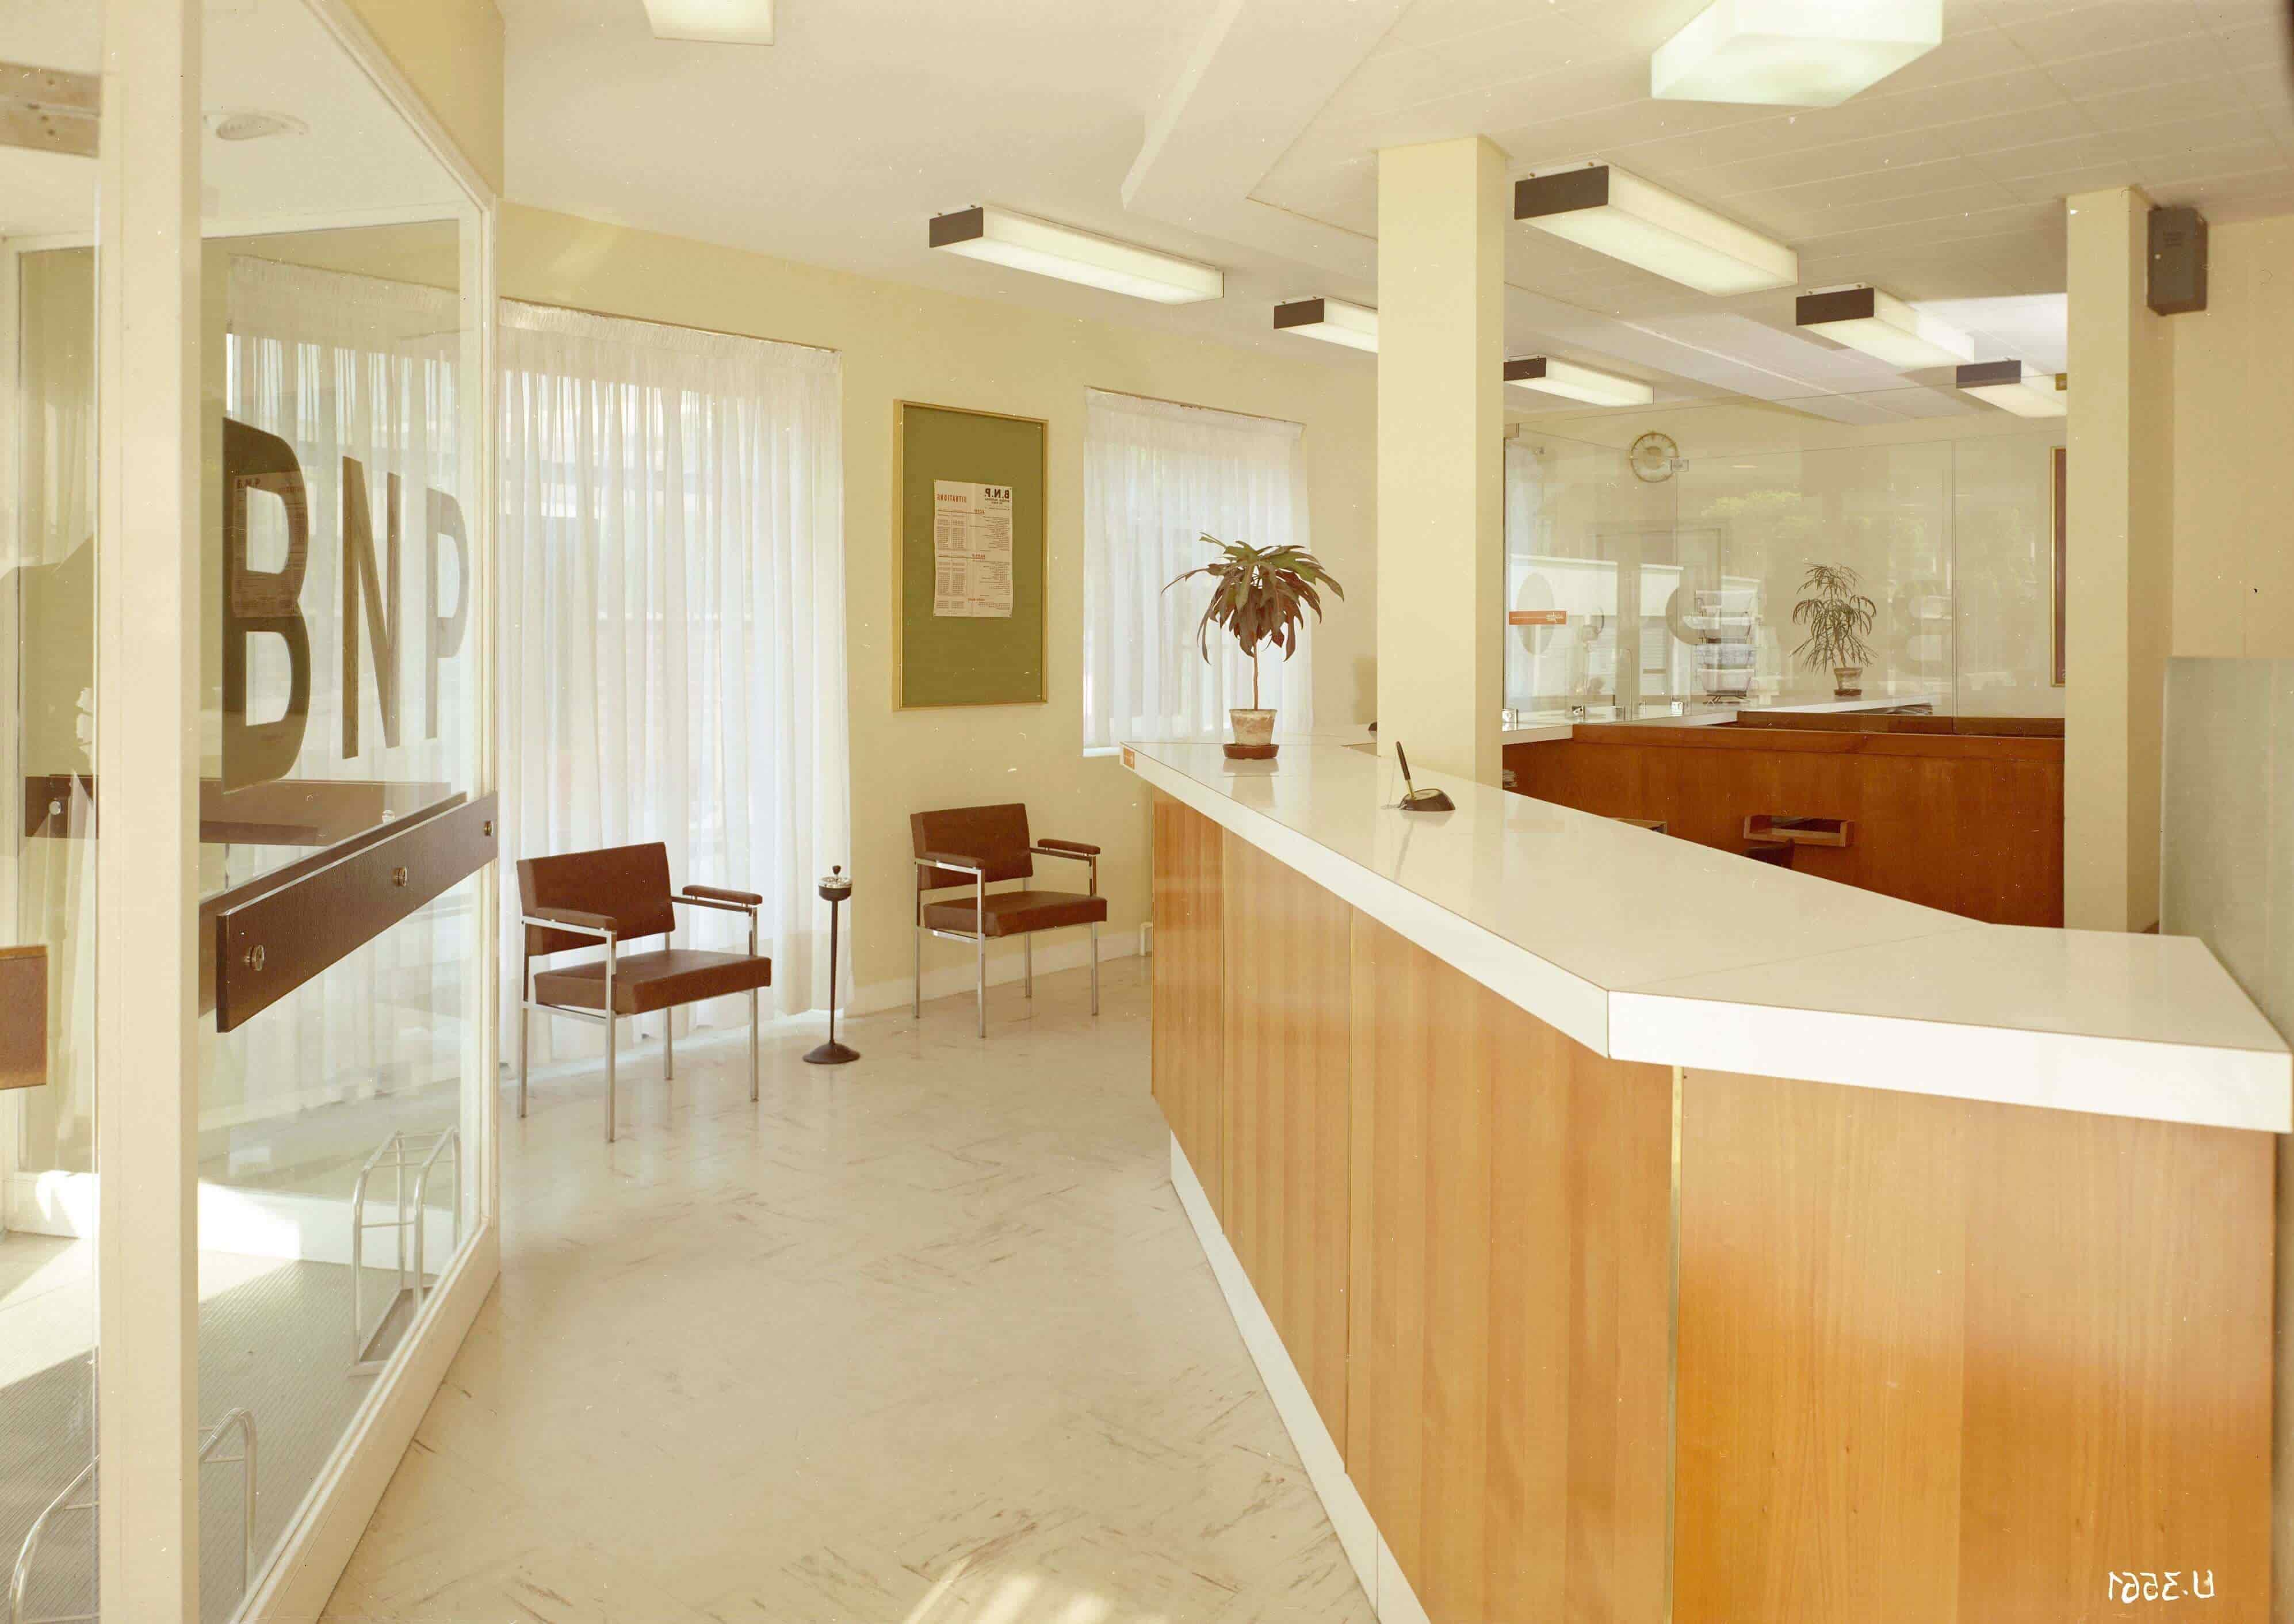  Modern Designs of Bank Interior